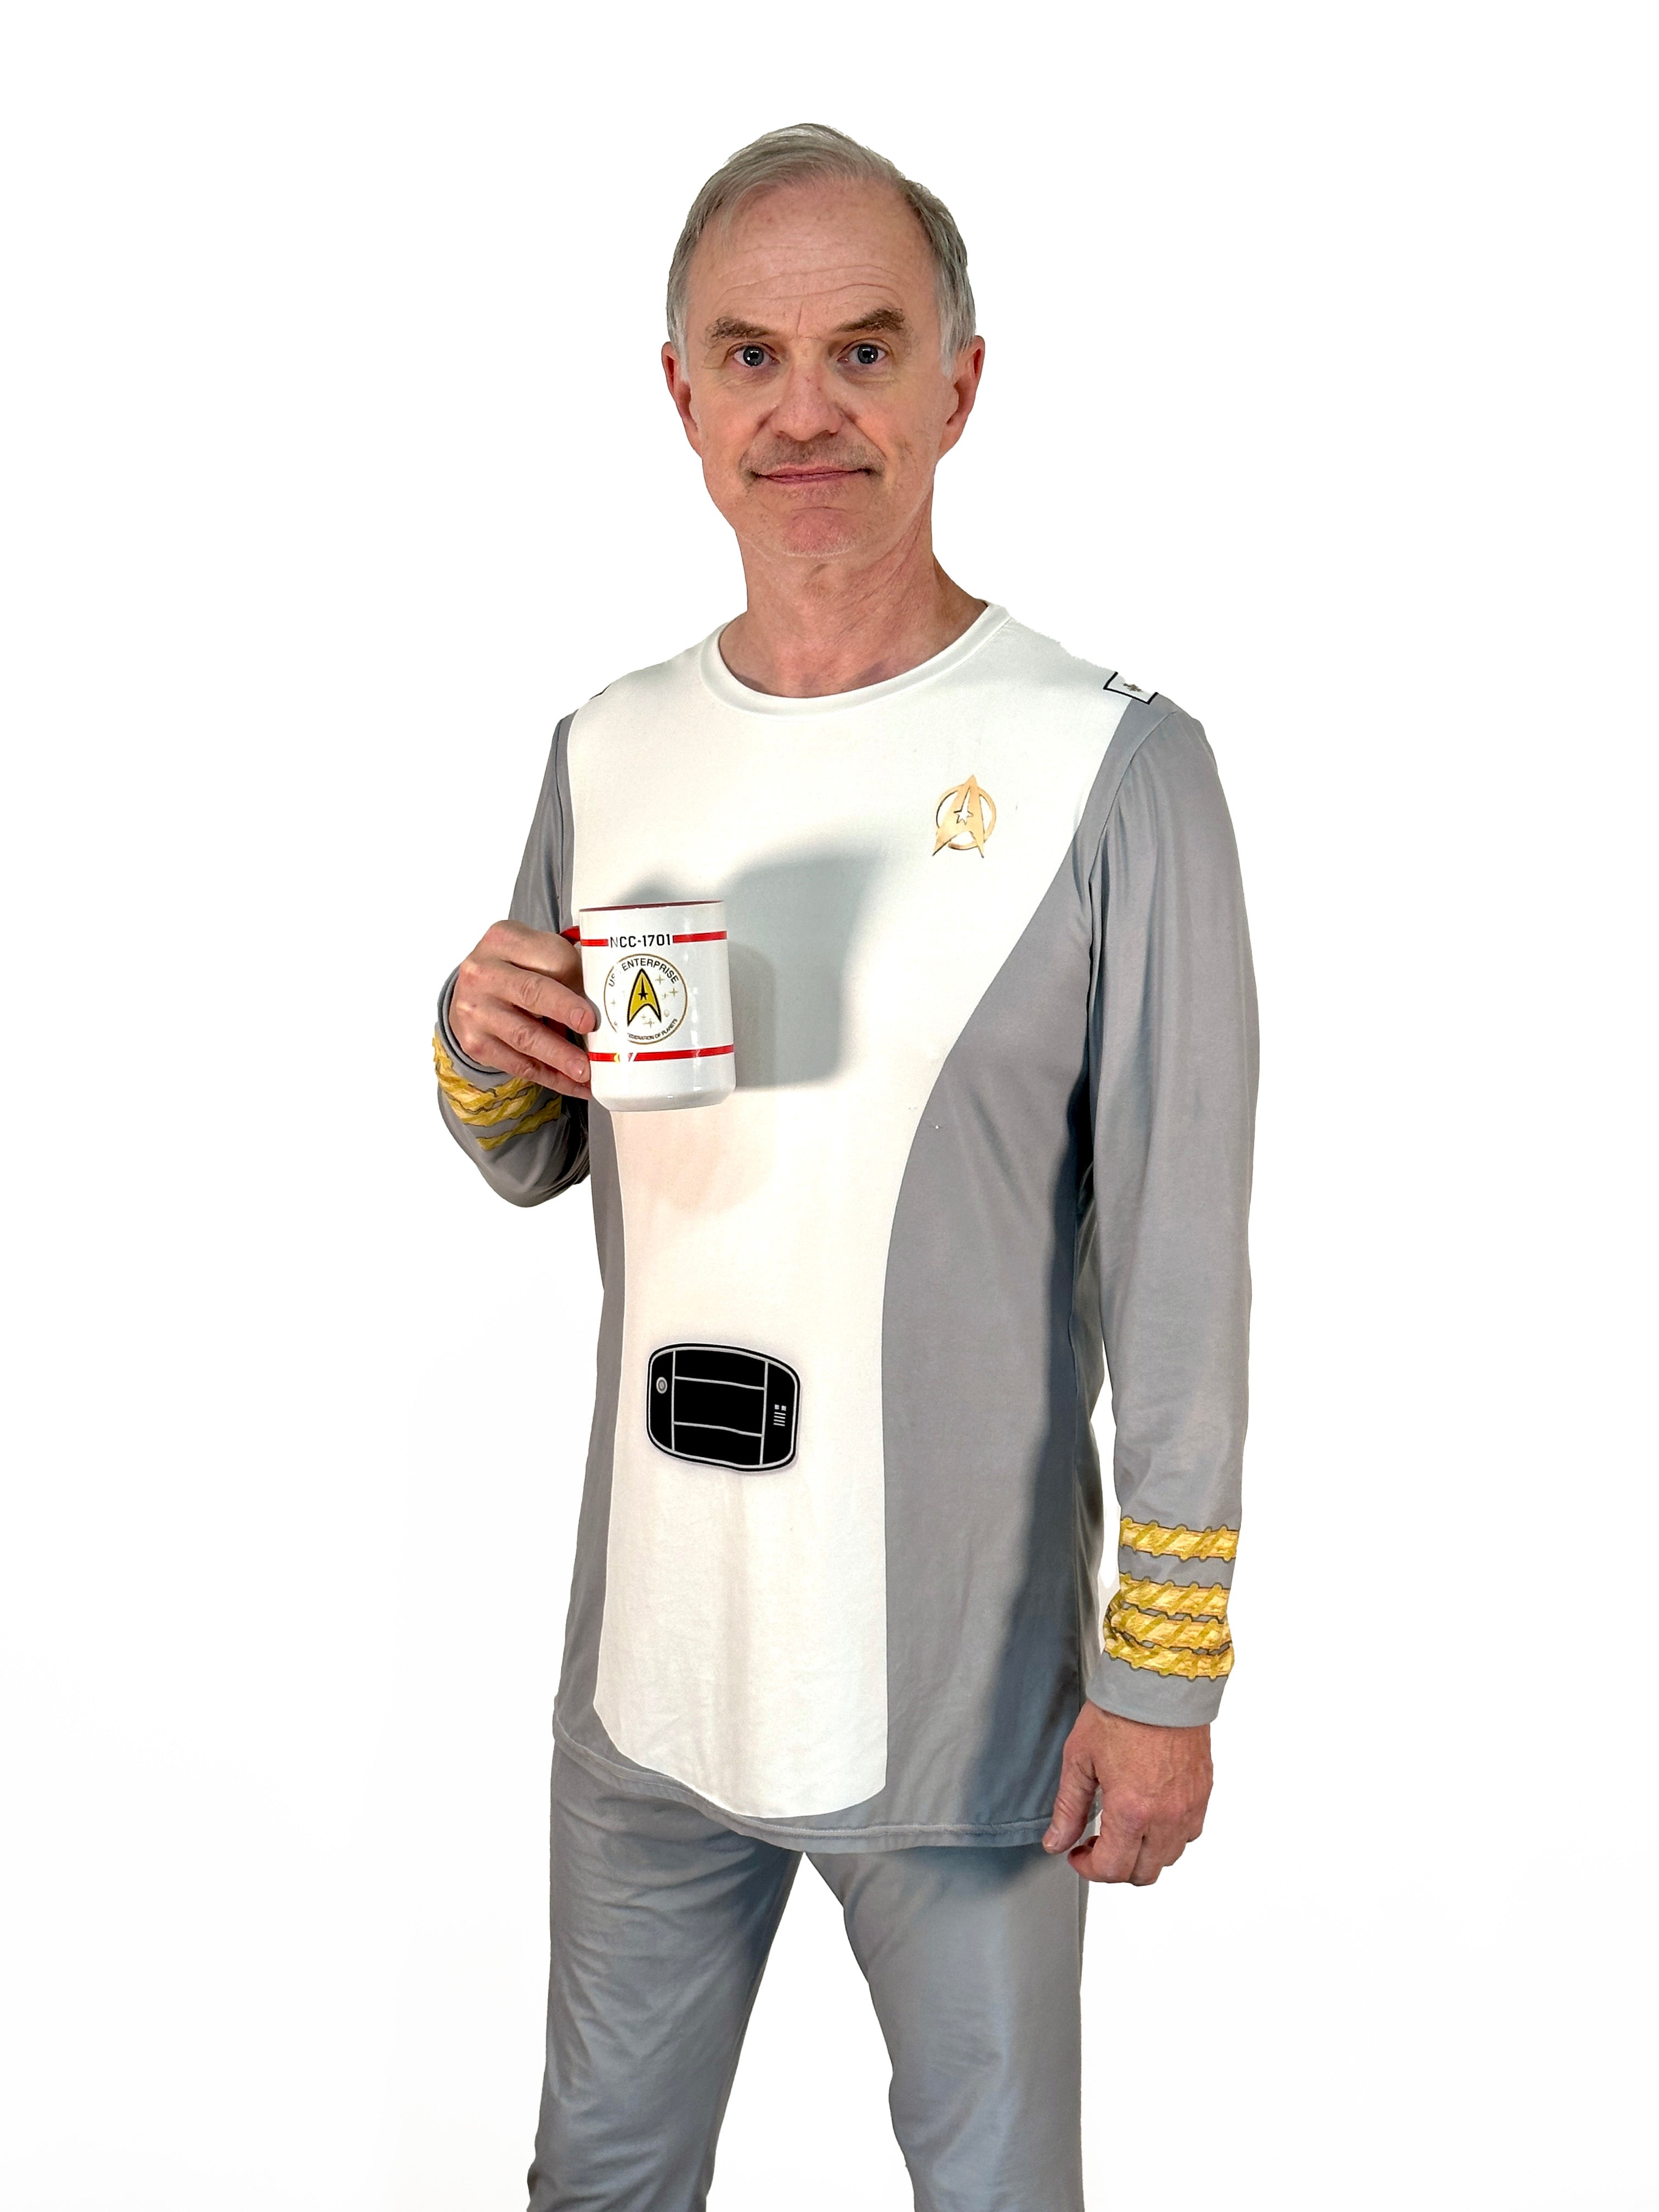 Admiral Kirk Star Trek uniform